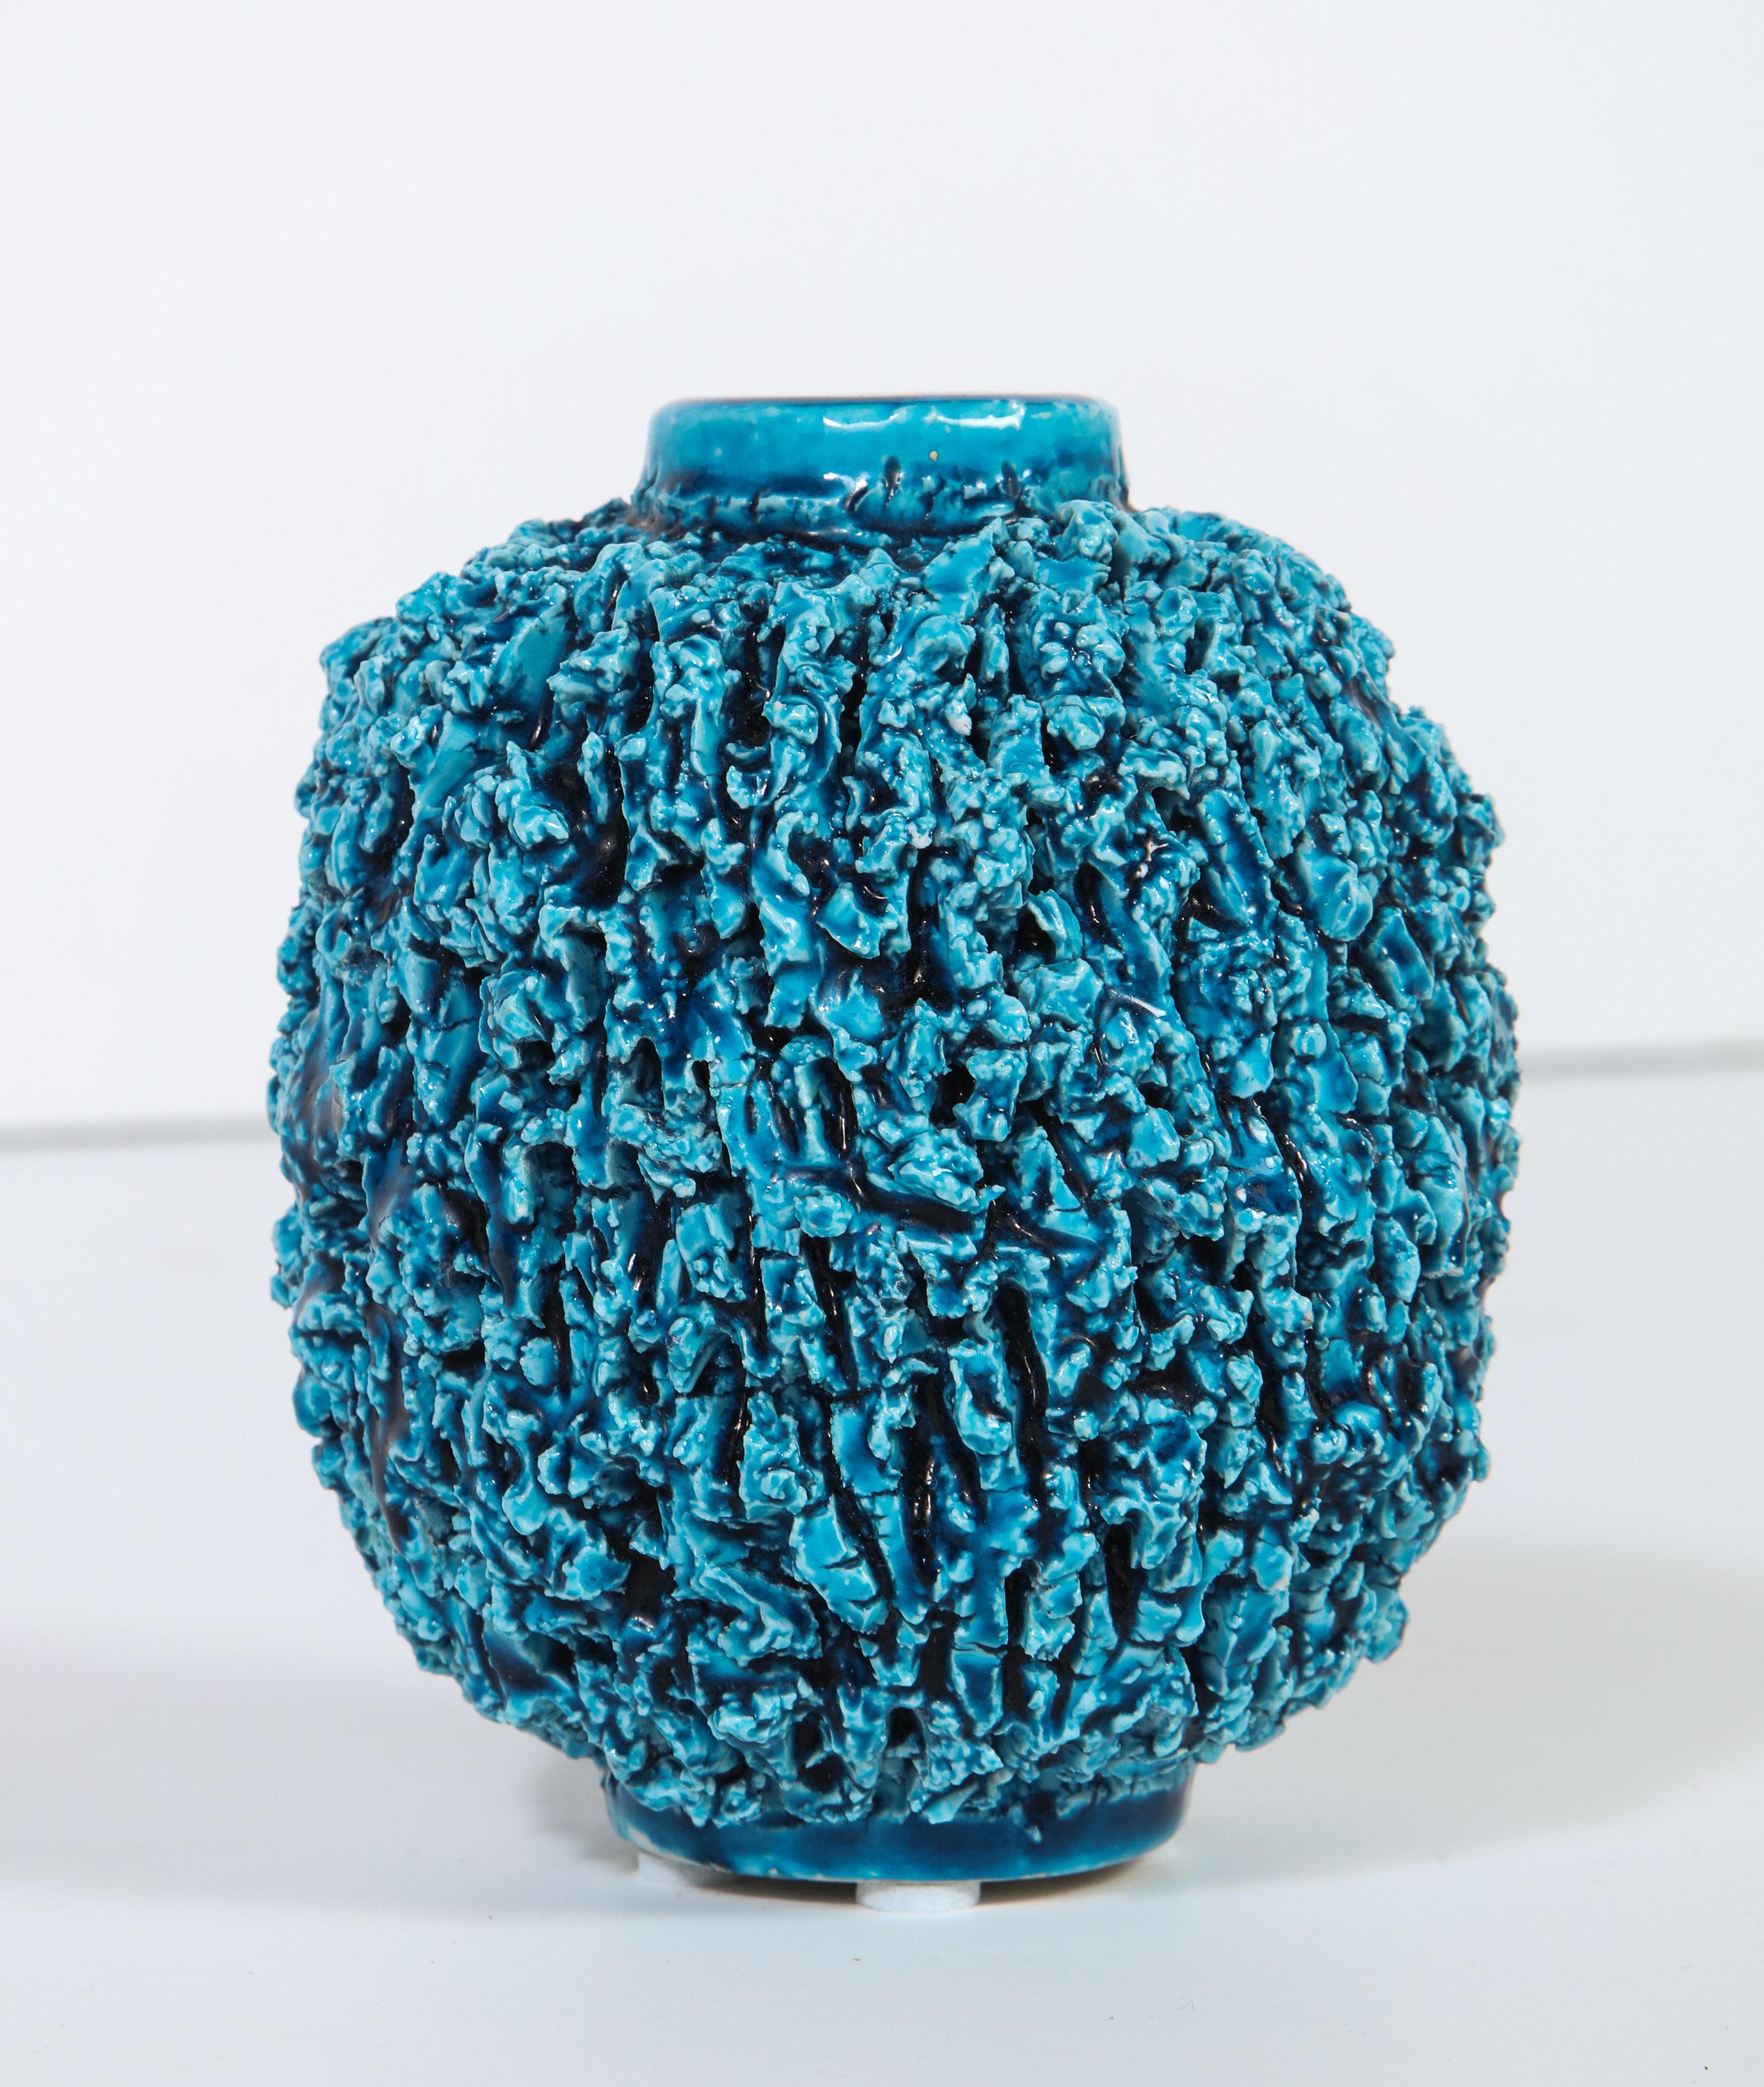 Mid-Century Modern Ceramic Vase by Gunnar Nylund, Scandinavian, circa 1950, Turquoise, 